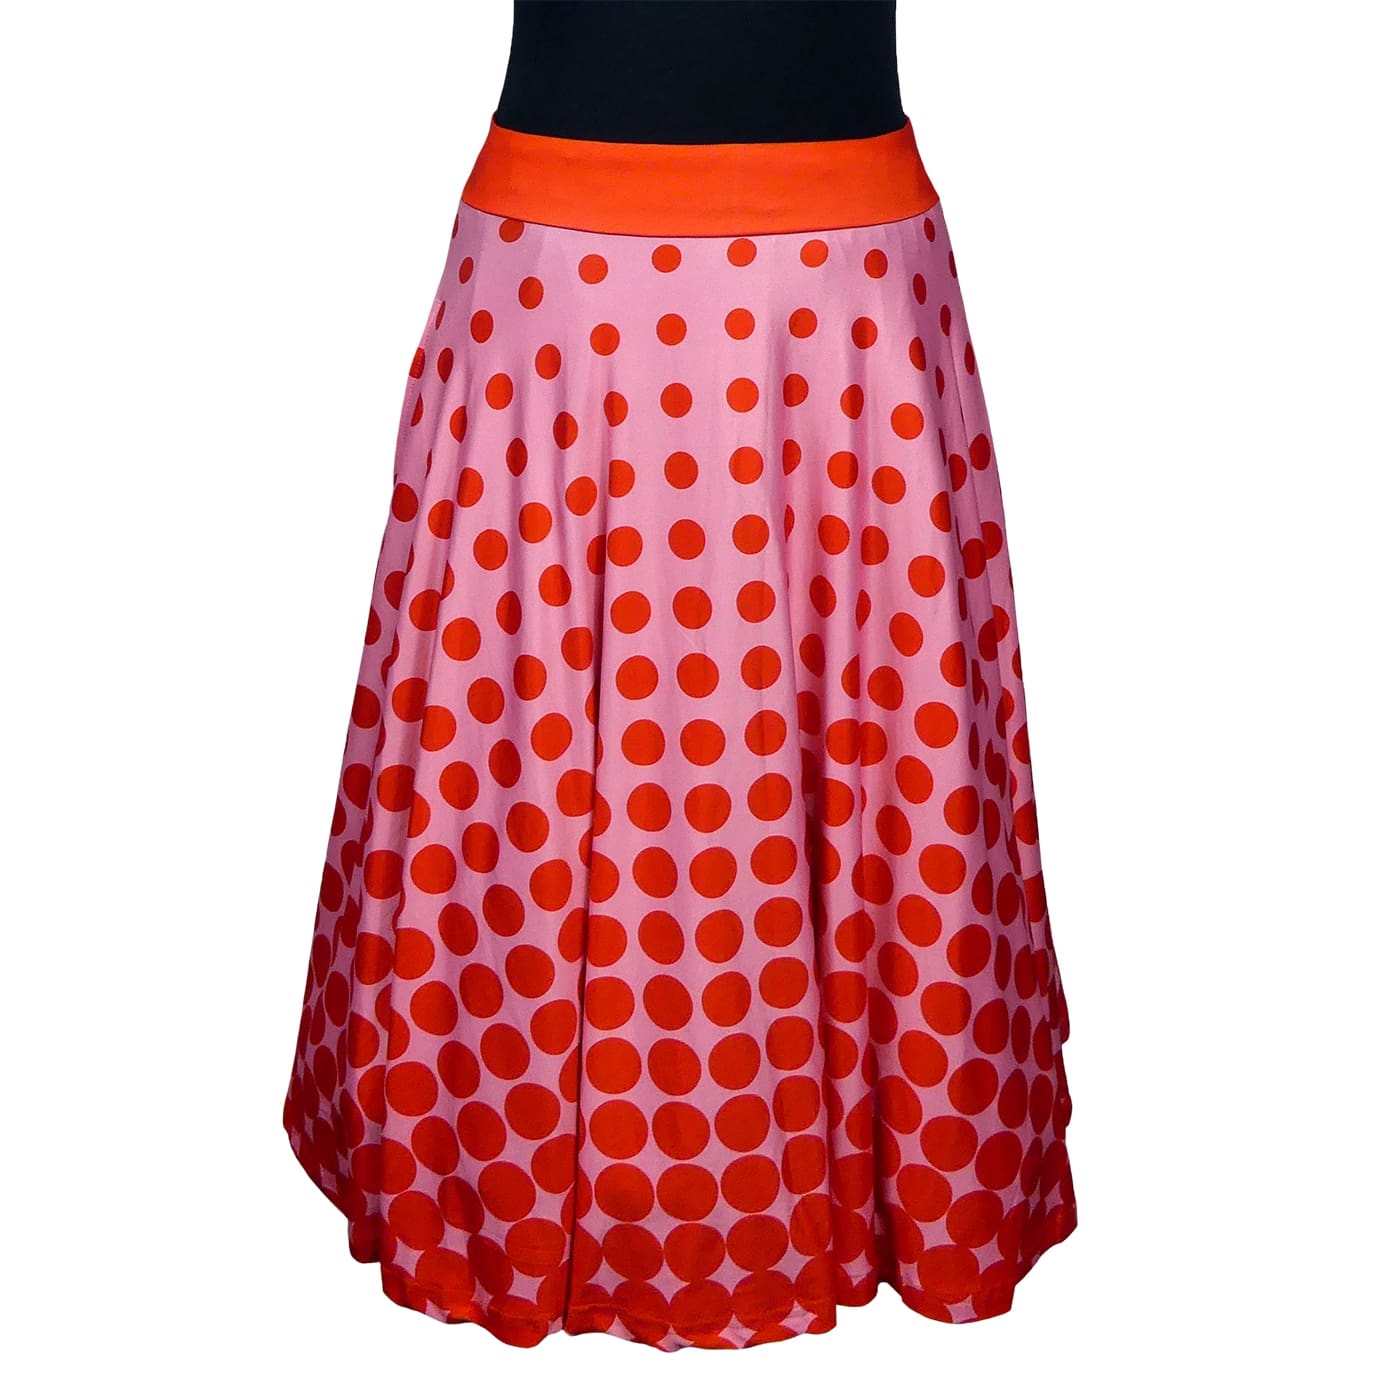 Blush Swishy Skirt by RainbowsAndFairies.com.au (Pink & Red - Polka Dot - Spots - Kitsch - Circle Skirt With Pockets - Mod Retro) - SKU: CL_SWISH_BLUSH_ORG - Pic-01